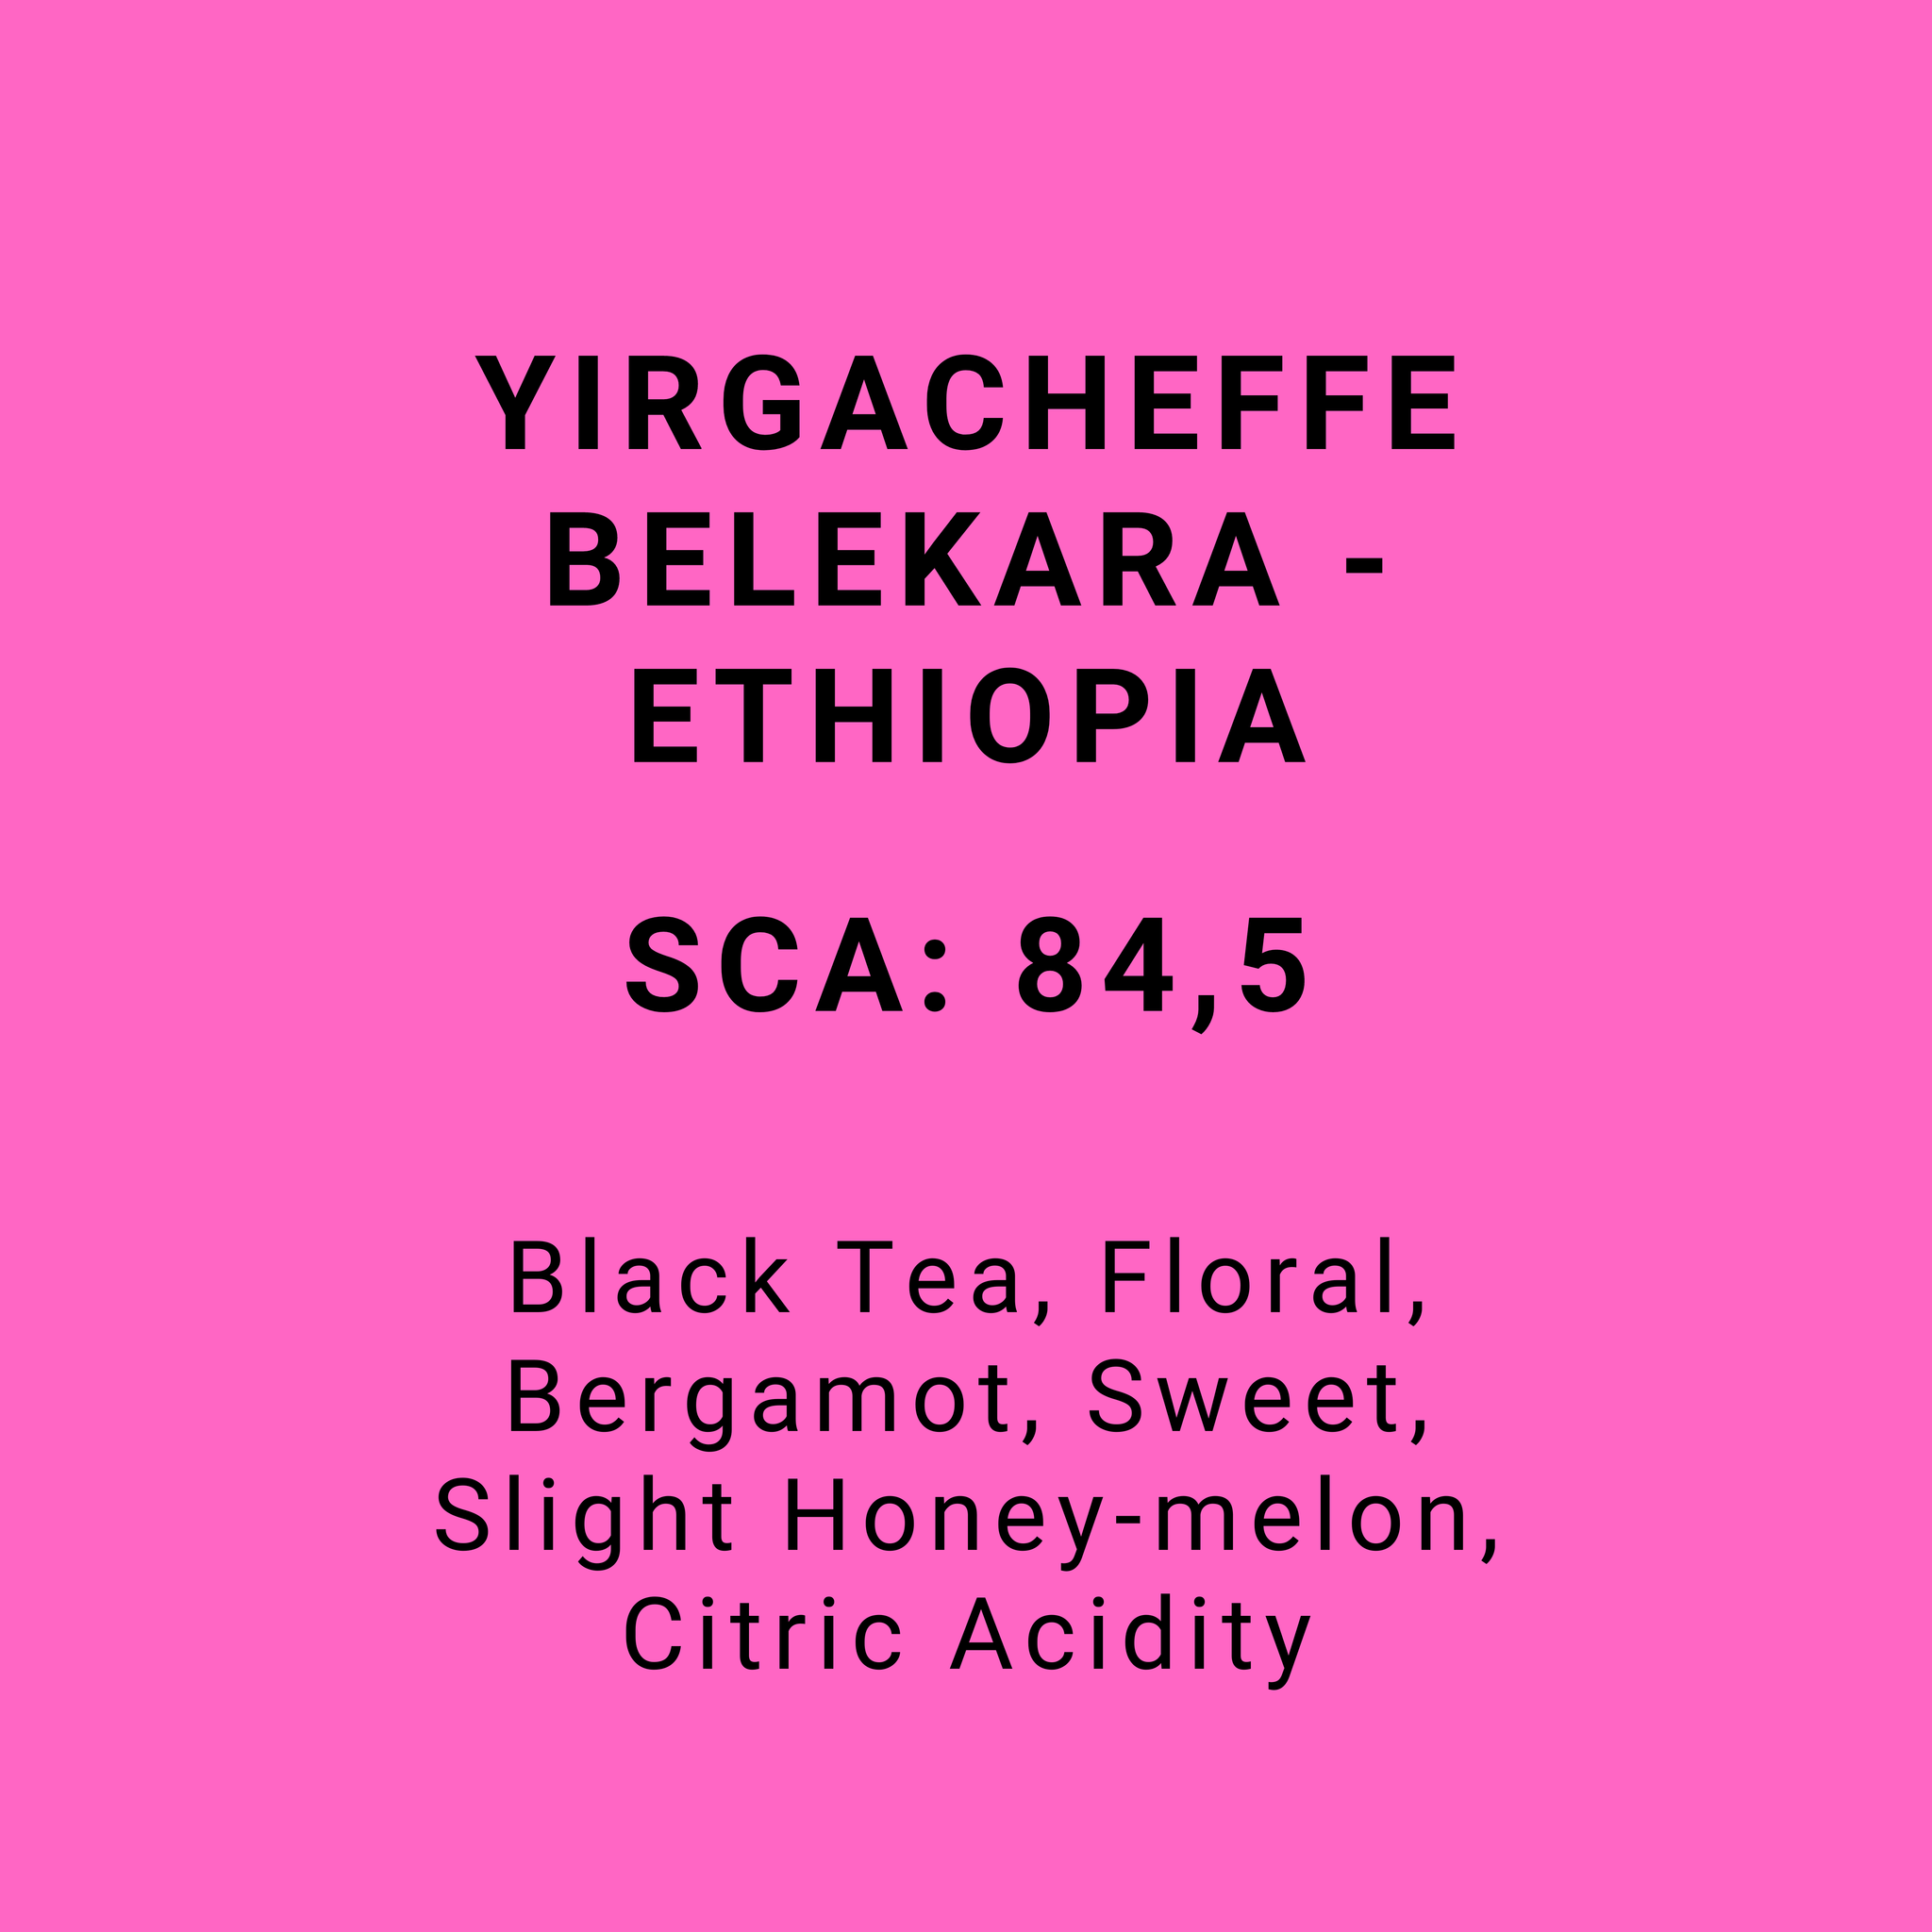 YIRGACHEFFE BELEKARA - ETHIOPIA